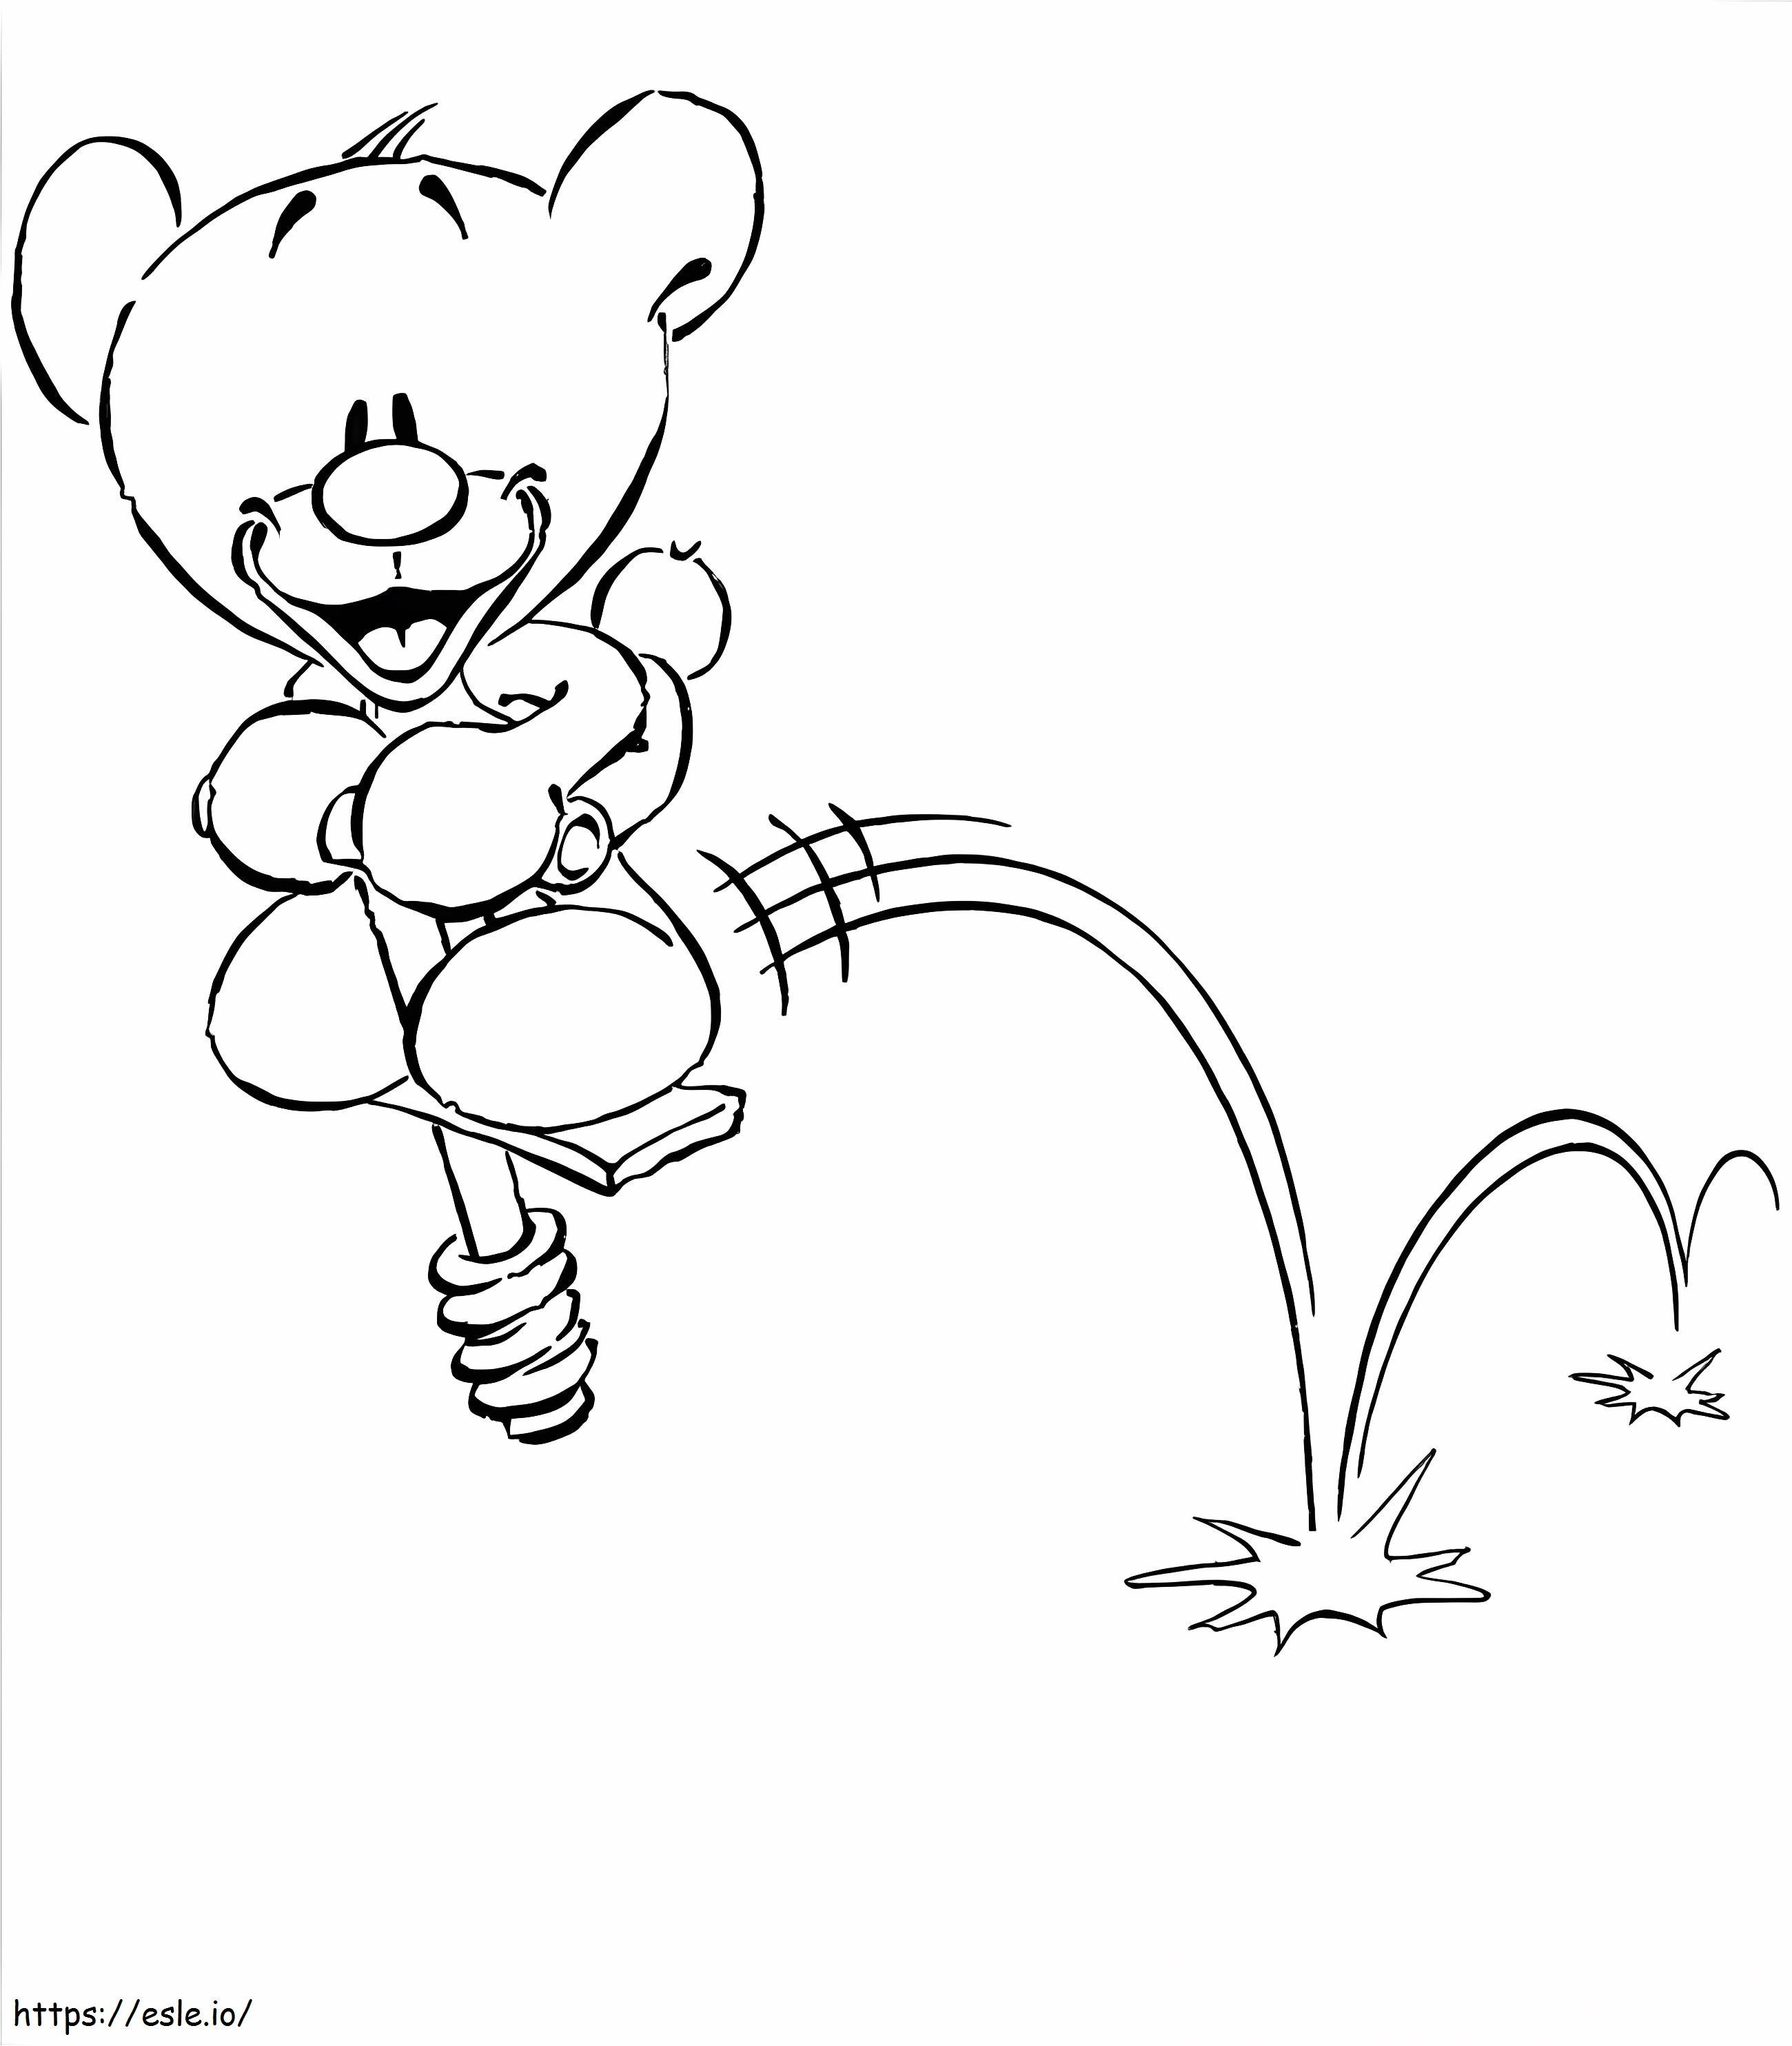 Pimboli Jumping coloring page